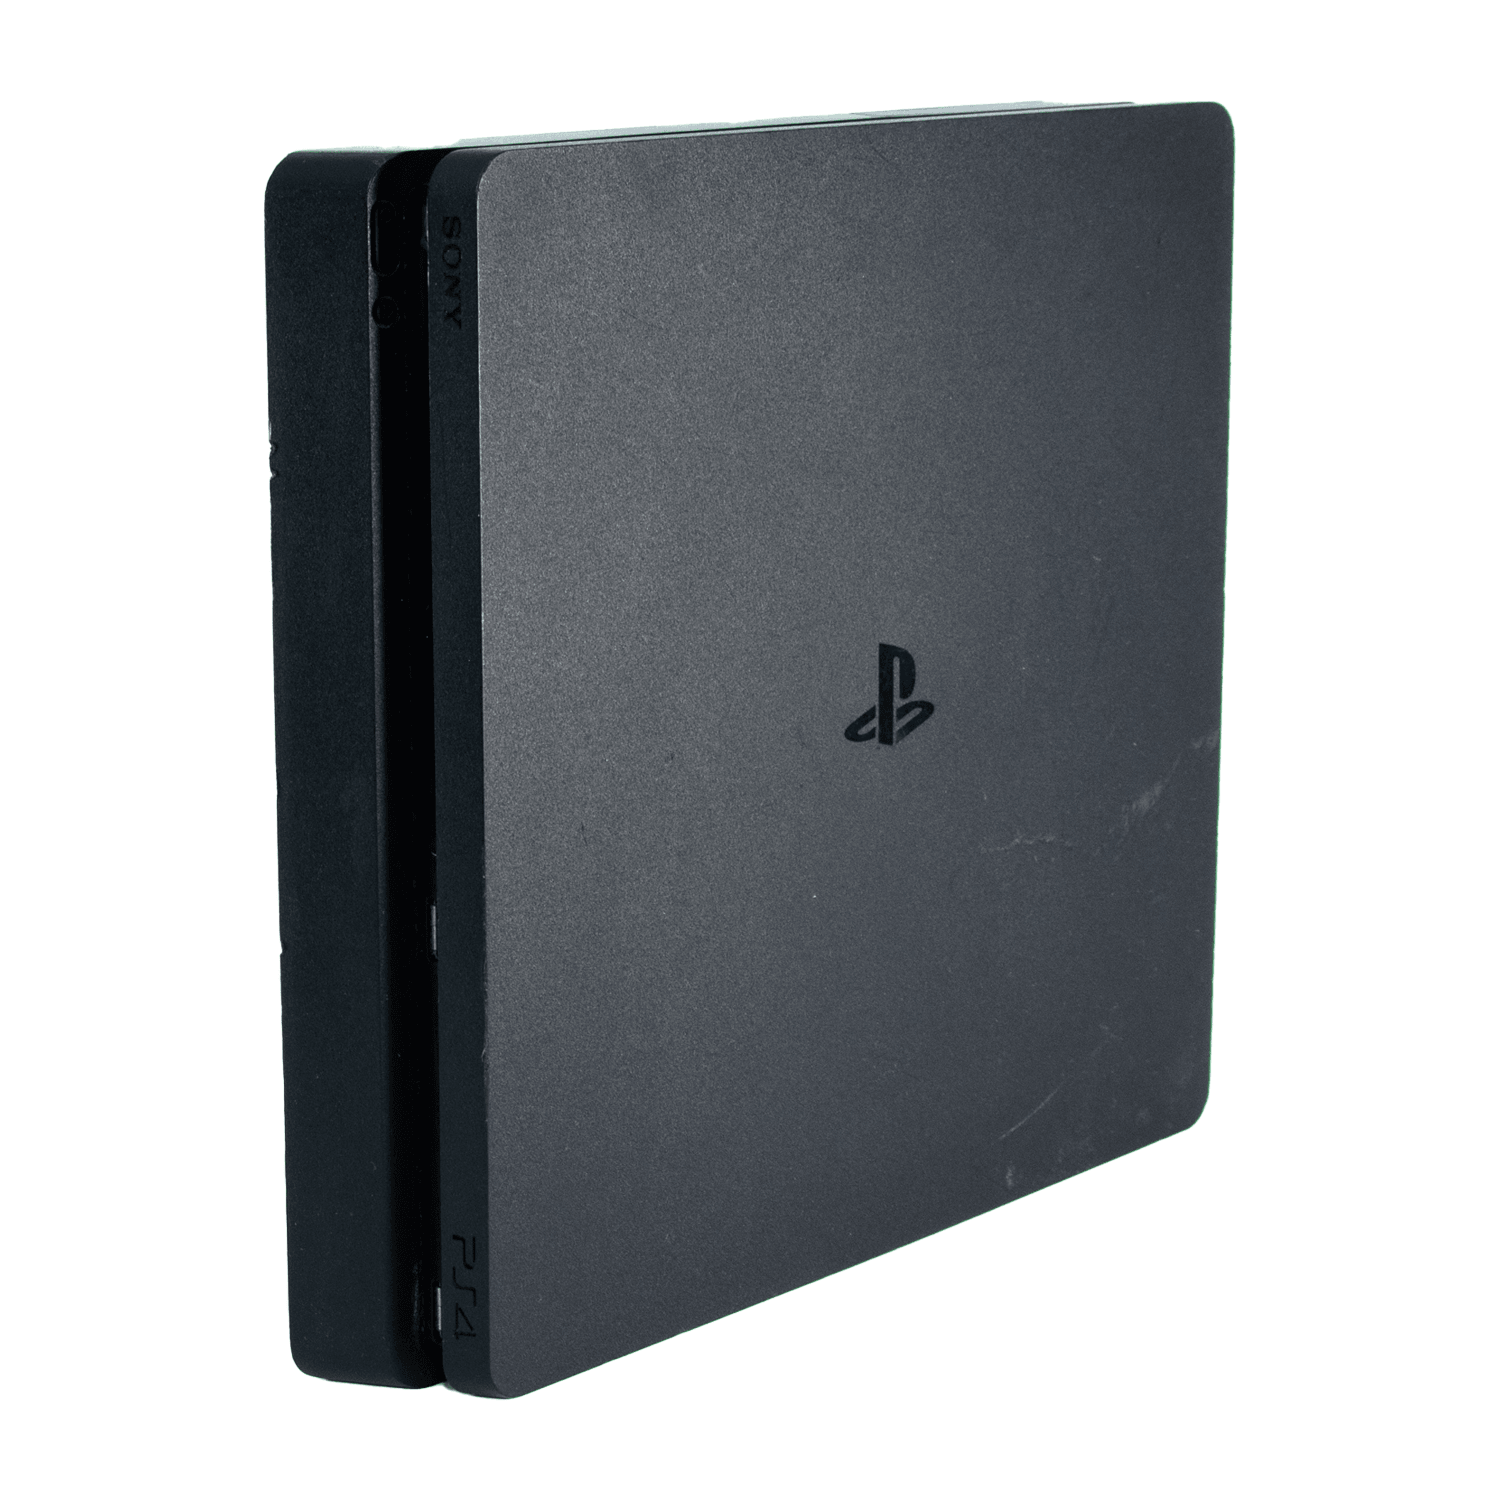 Sony PlayStation - ipawnishop.com